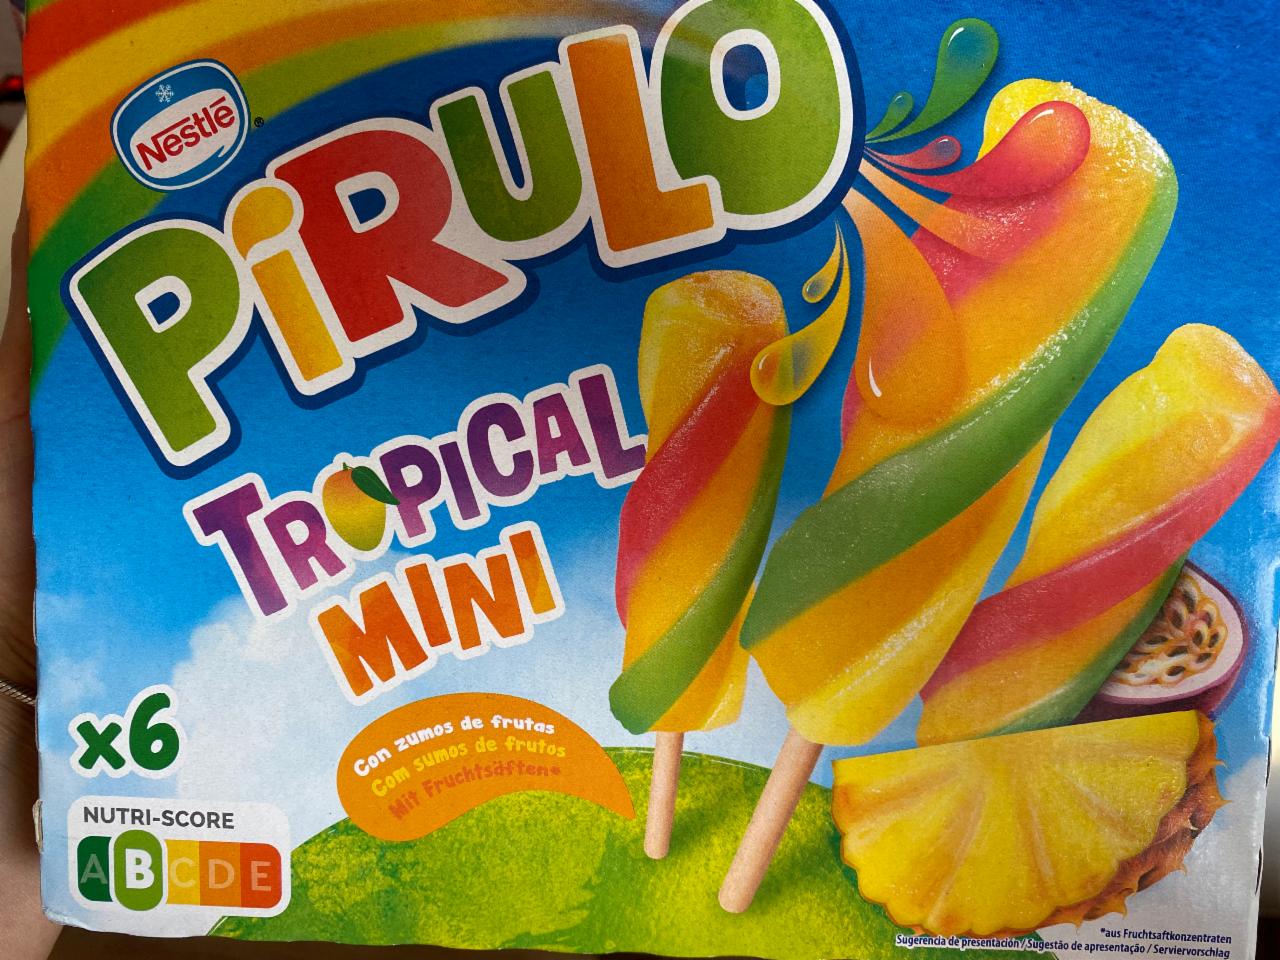 Фото - Pirulo tropical mini Nestlé